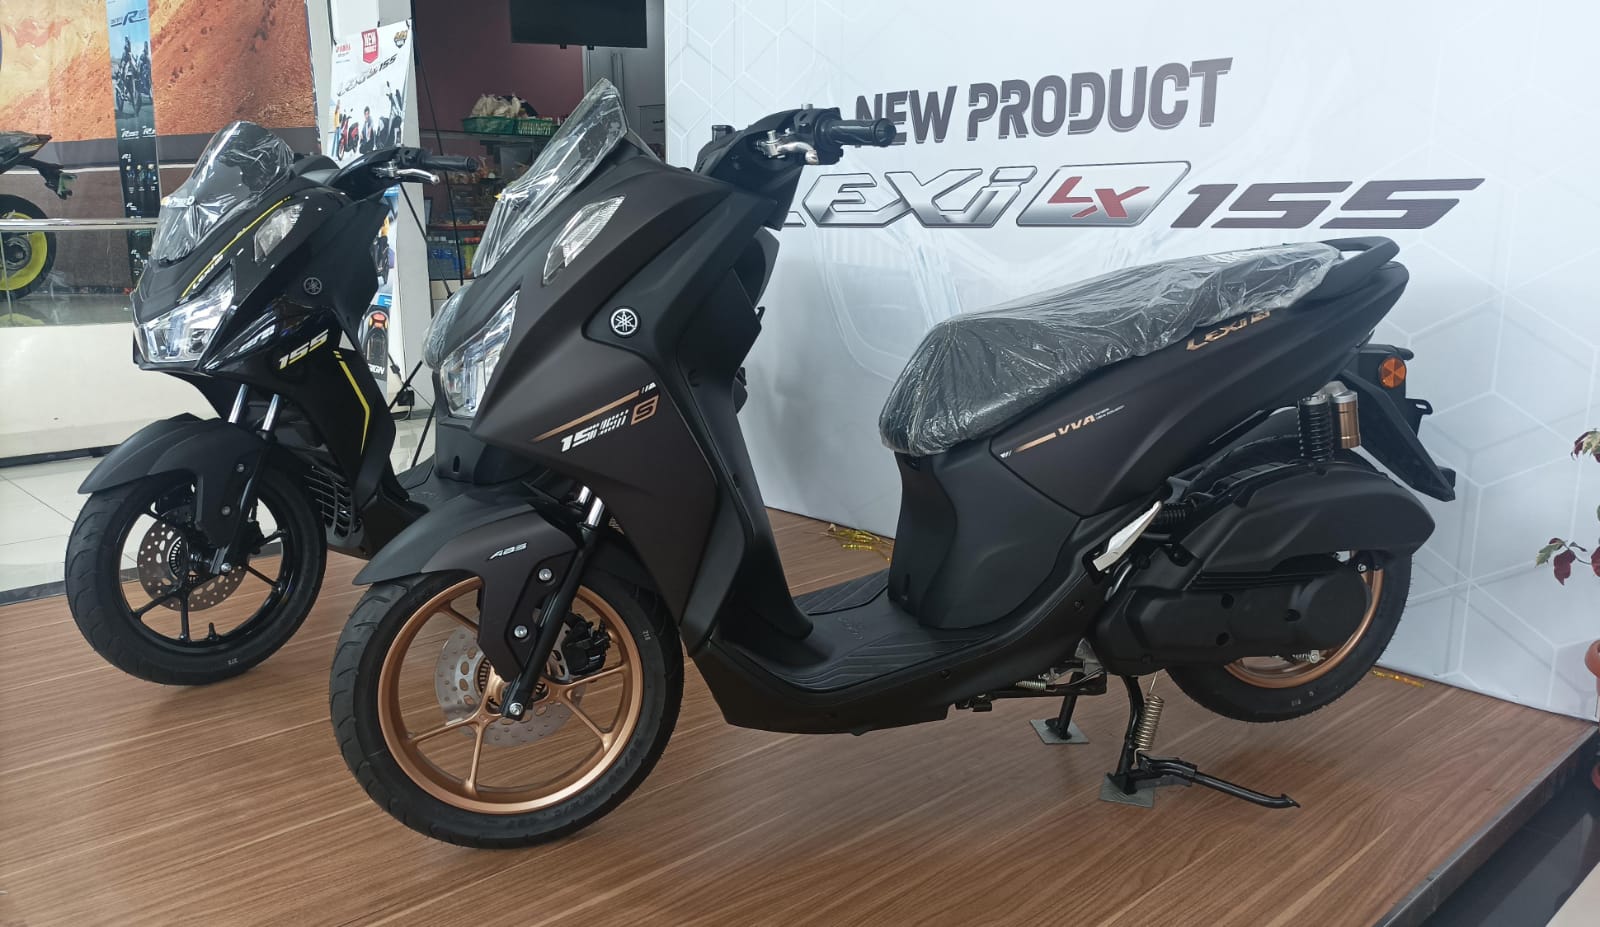 Biaya Kepemilikan Yamaha Lexi LX 155 Selama 3 Tahun Cukup Rp 700 Ribuan Saja